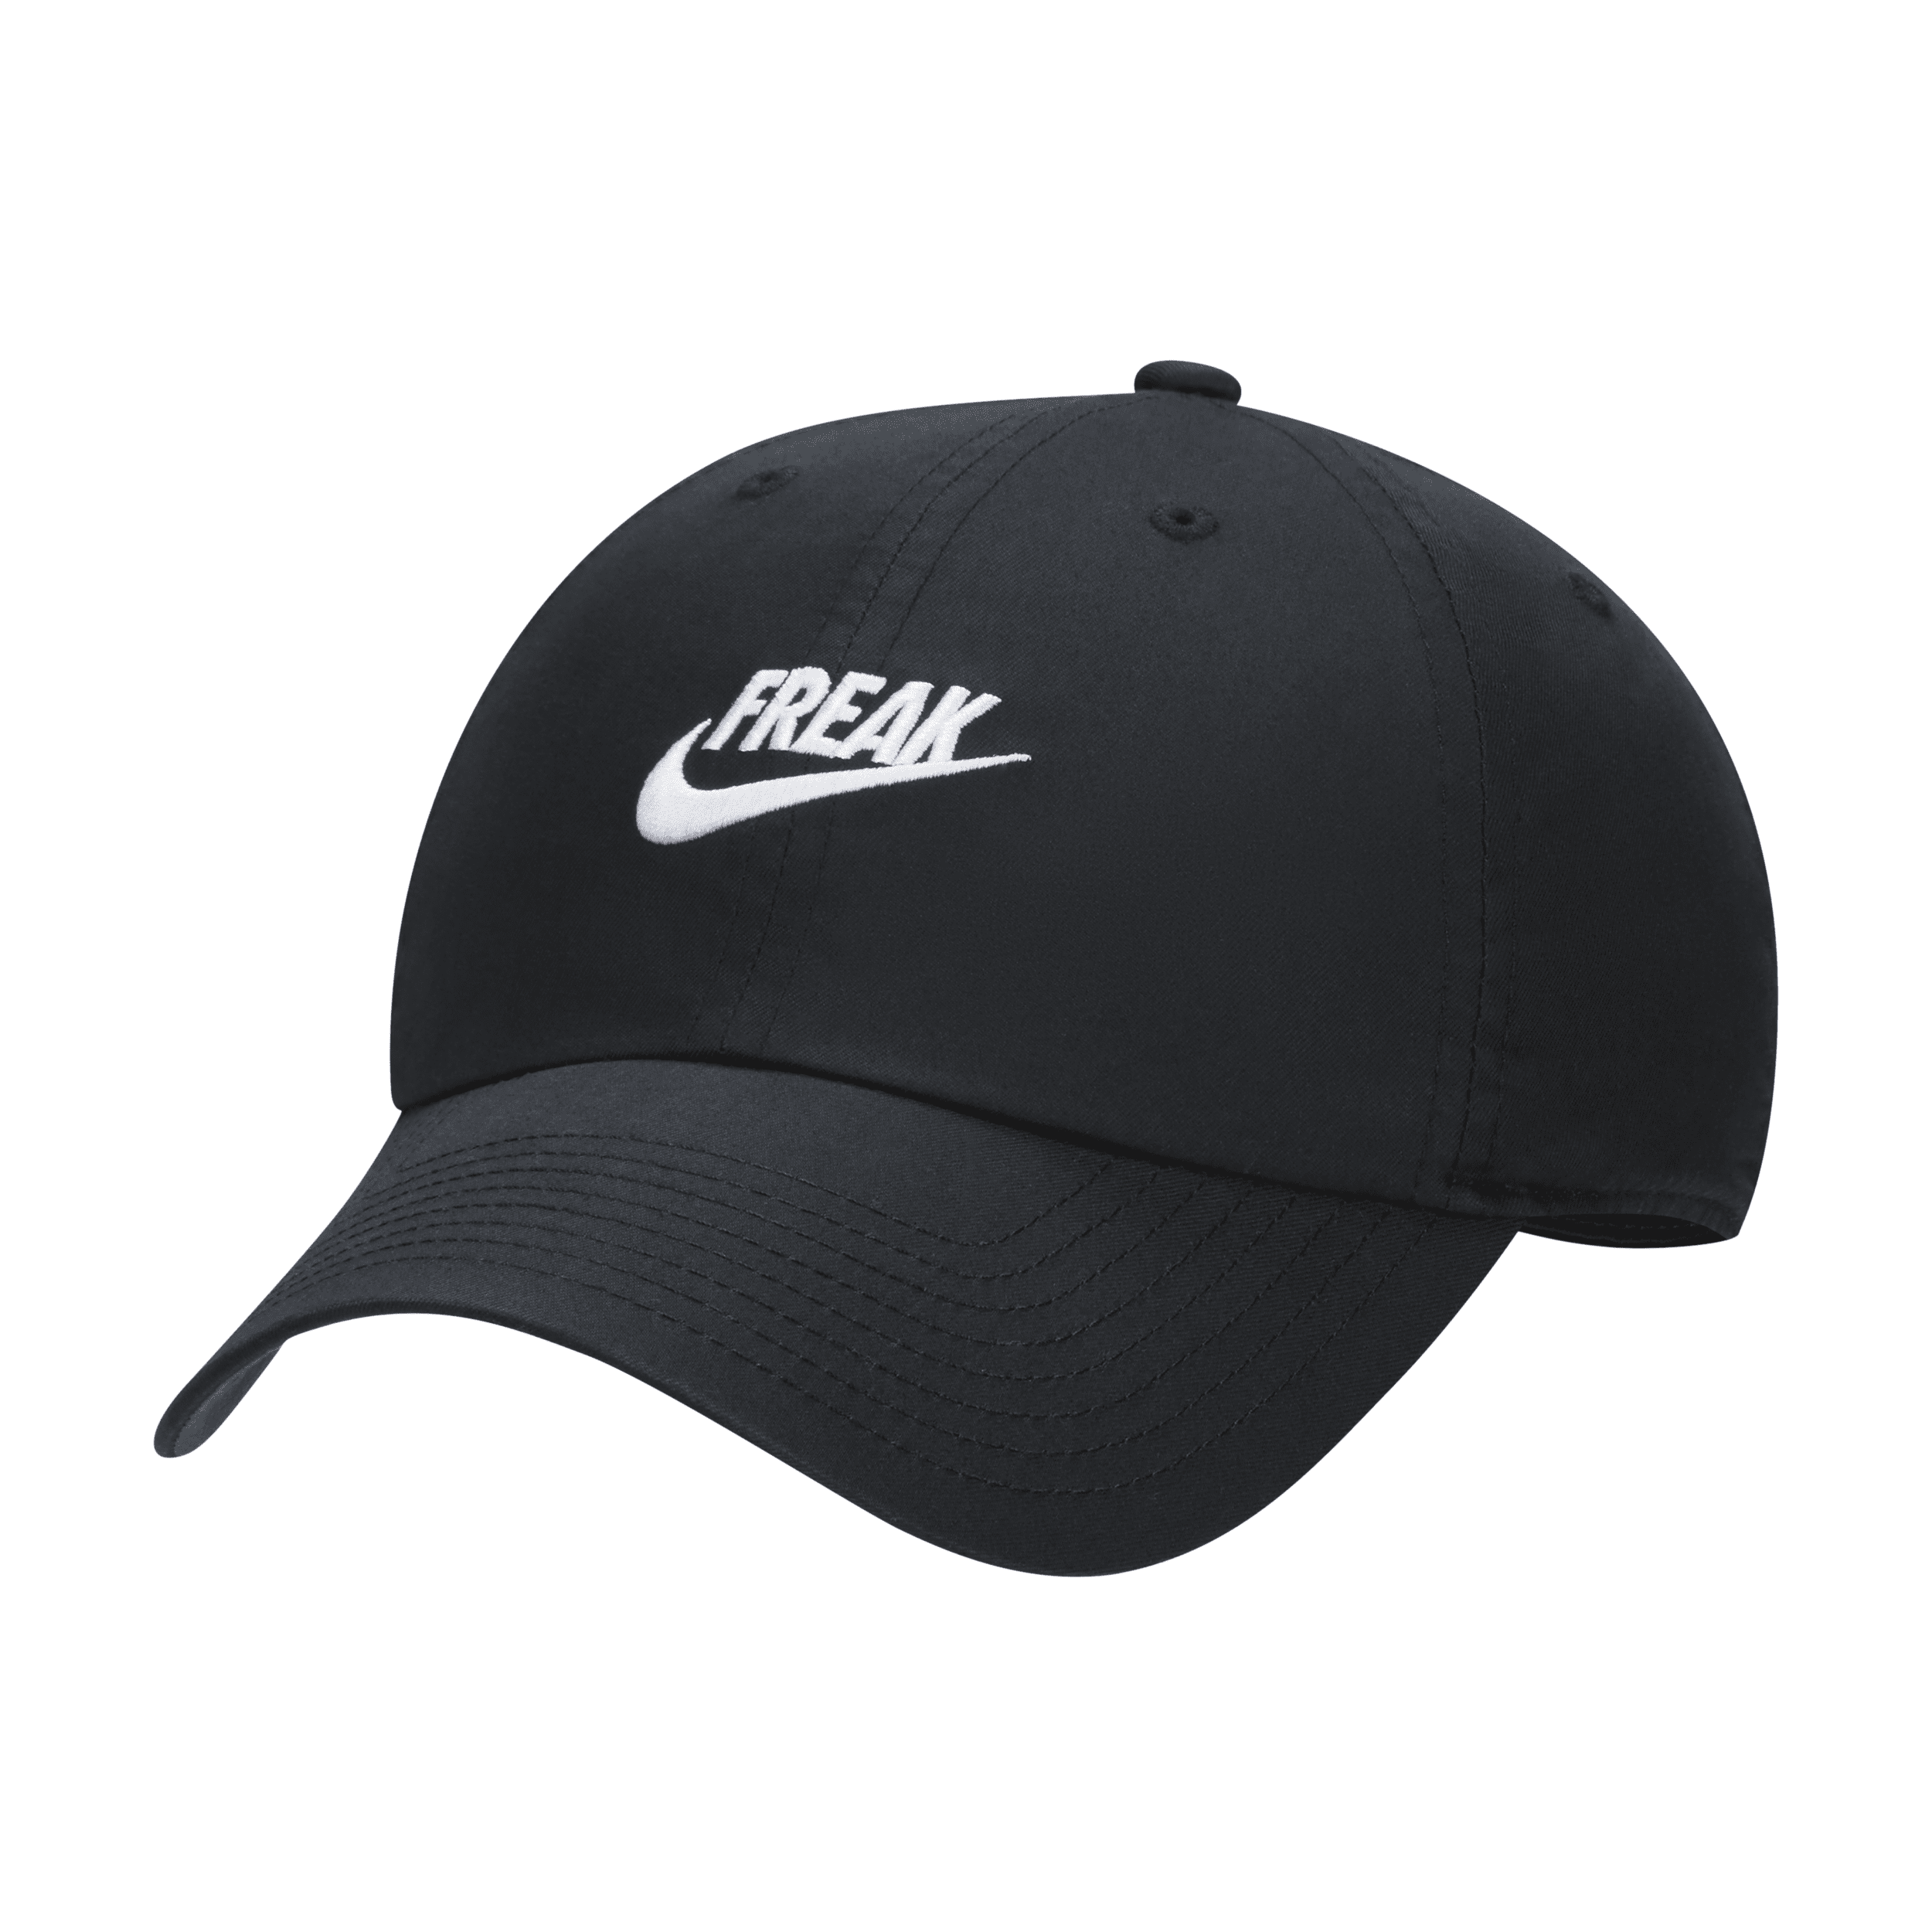 Nike Giannis Antetokounmpo  Unisex Dri-fit Club Unstructured "freak" Cap In Black